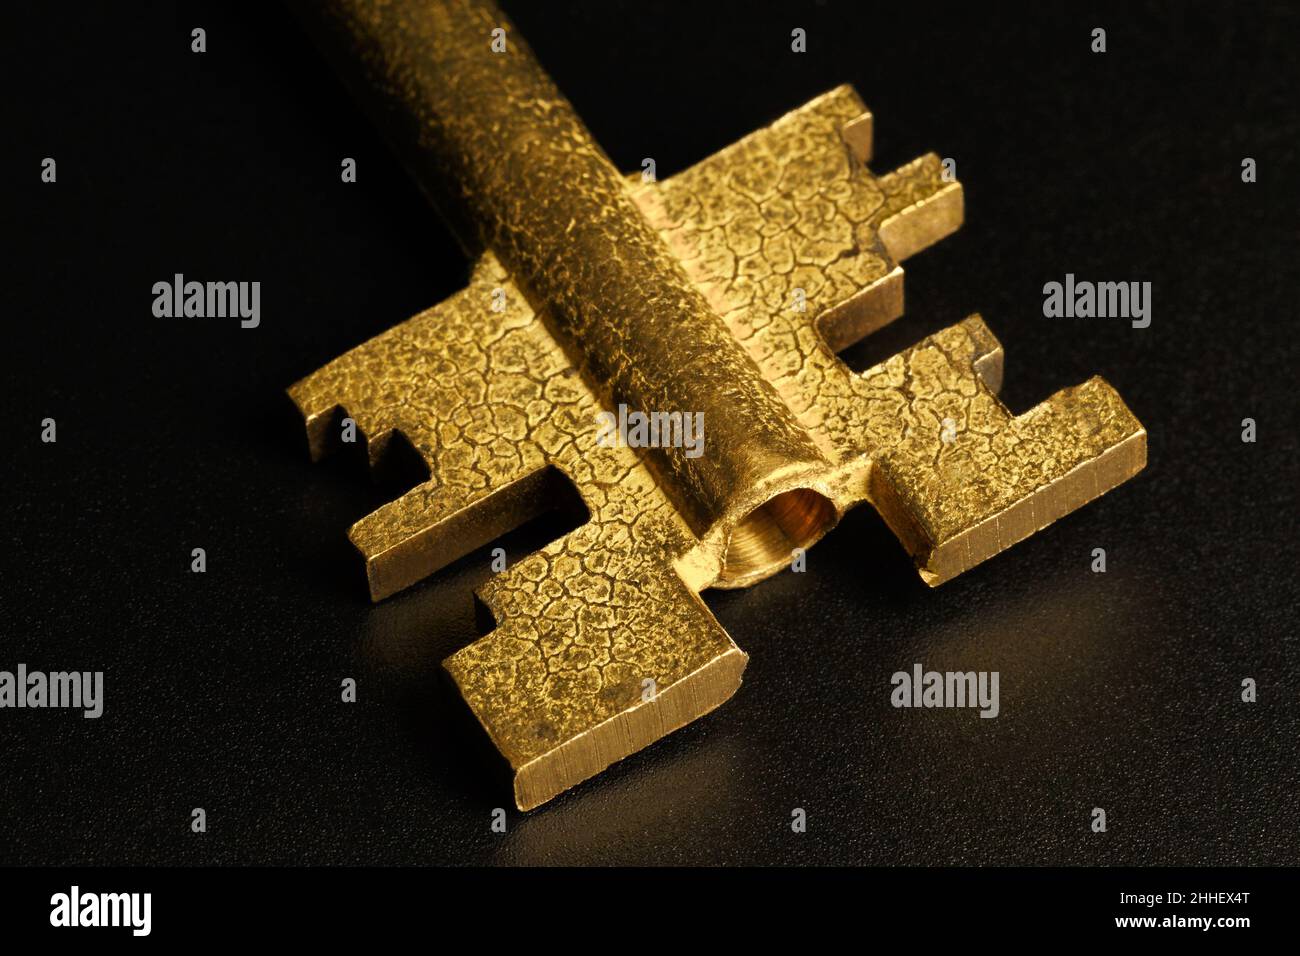 Brass key bit on a dark background. Macro photography Stock Photo